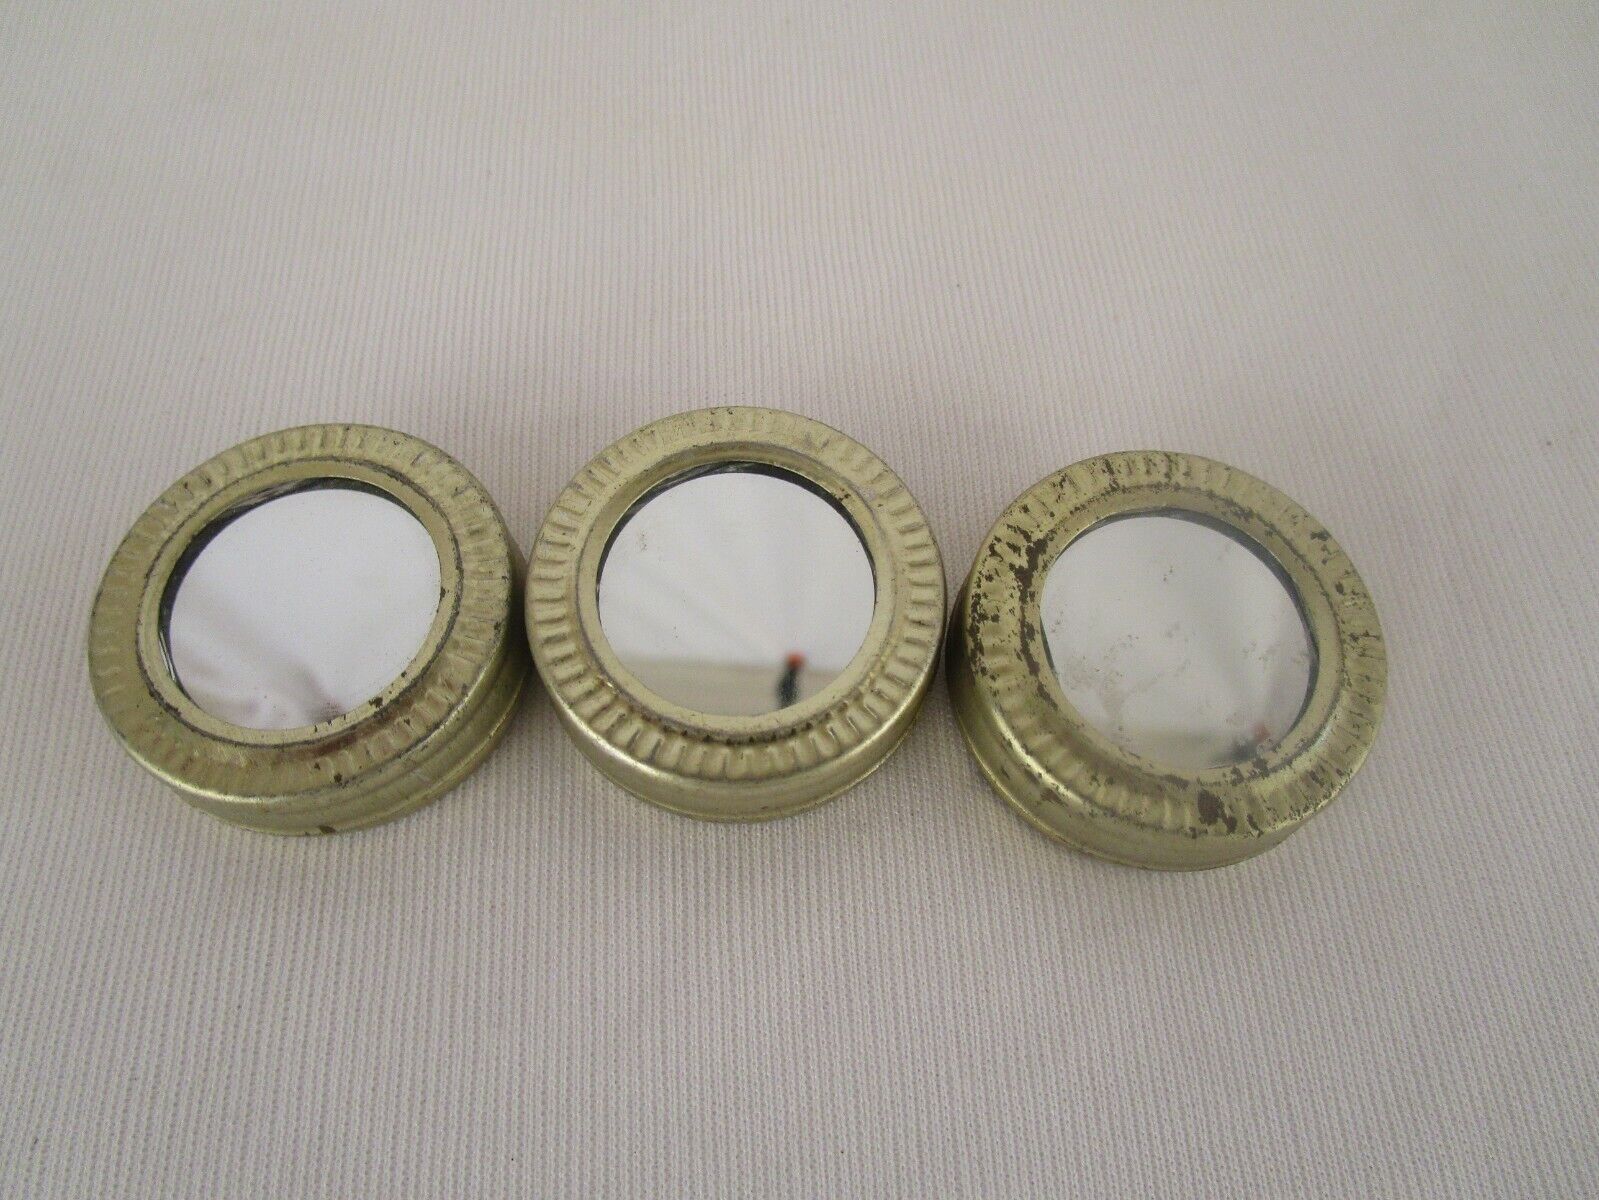 3 Pcs.Mini Vintage Mirror Fitted Makeup kajal powder / Eyeliner Round tin Box